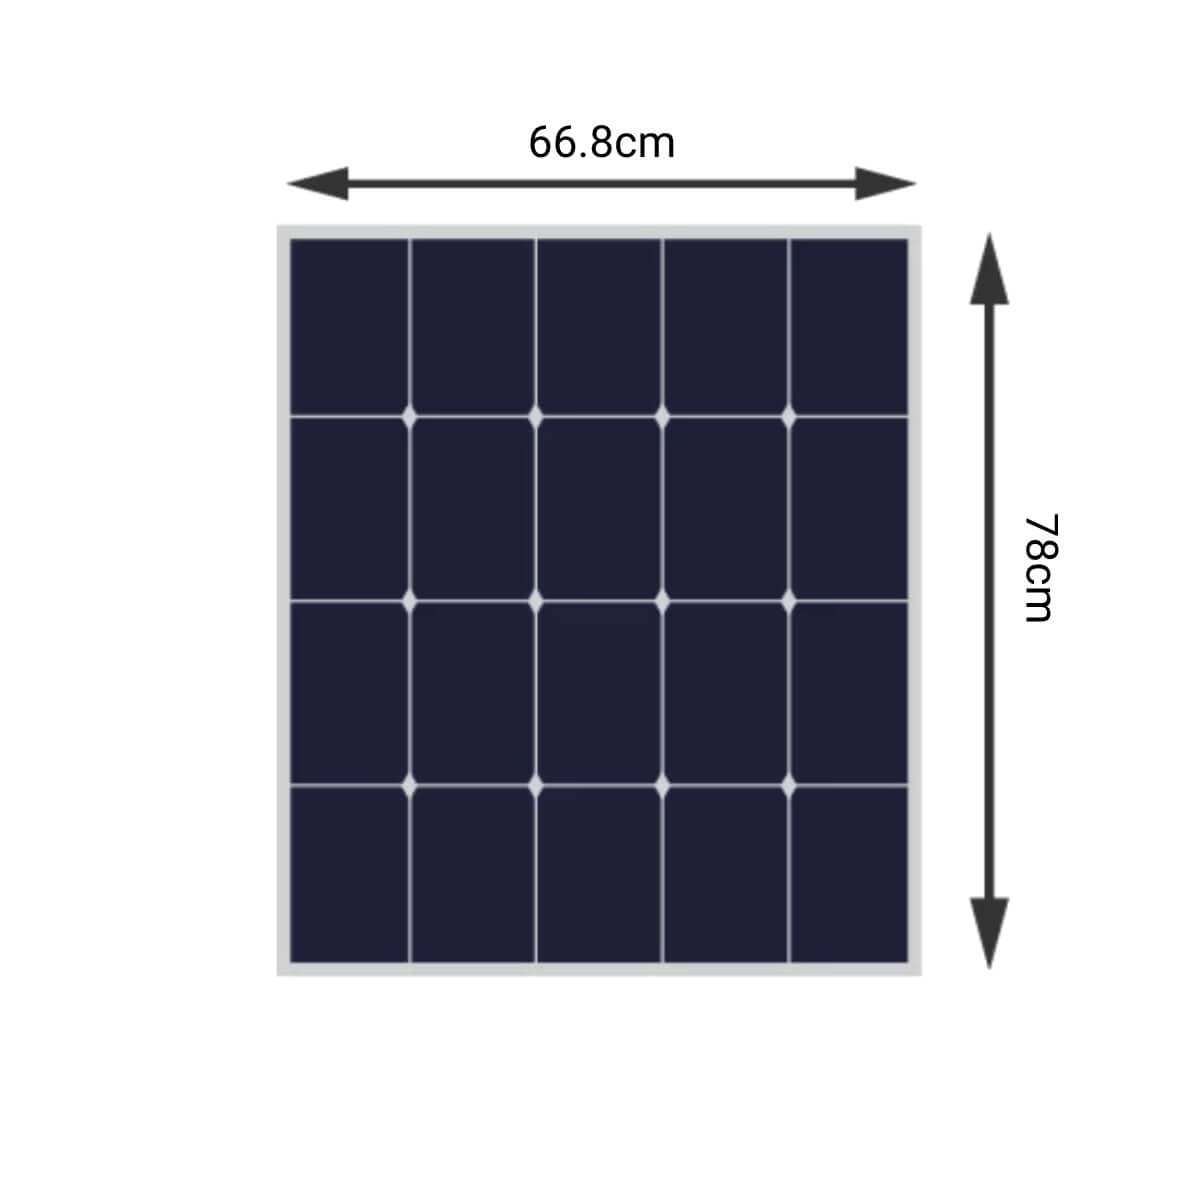 180W Solar Panel Kit – 2x 90W dimensions